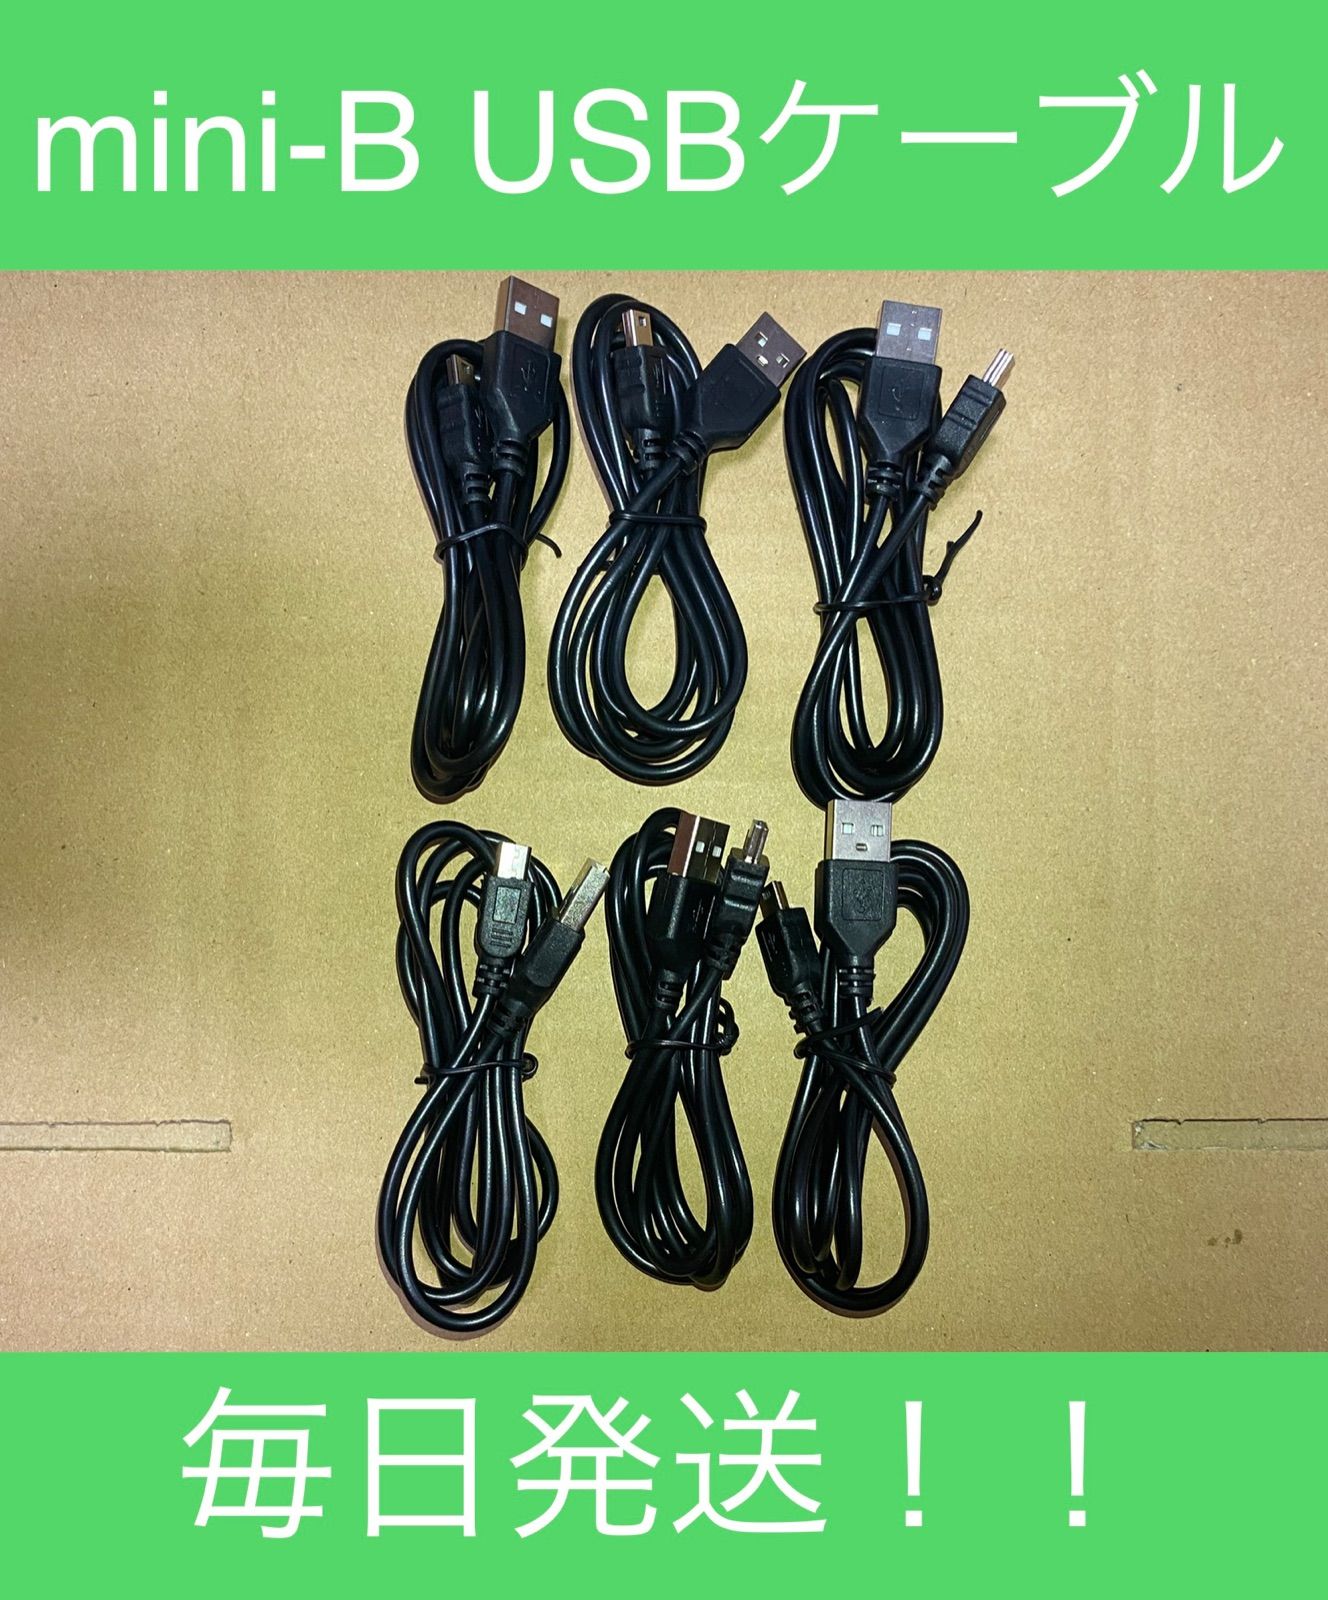 PS3 mini USB type-B ケーブル デジカメ mp3プレーヤー